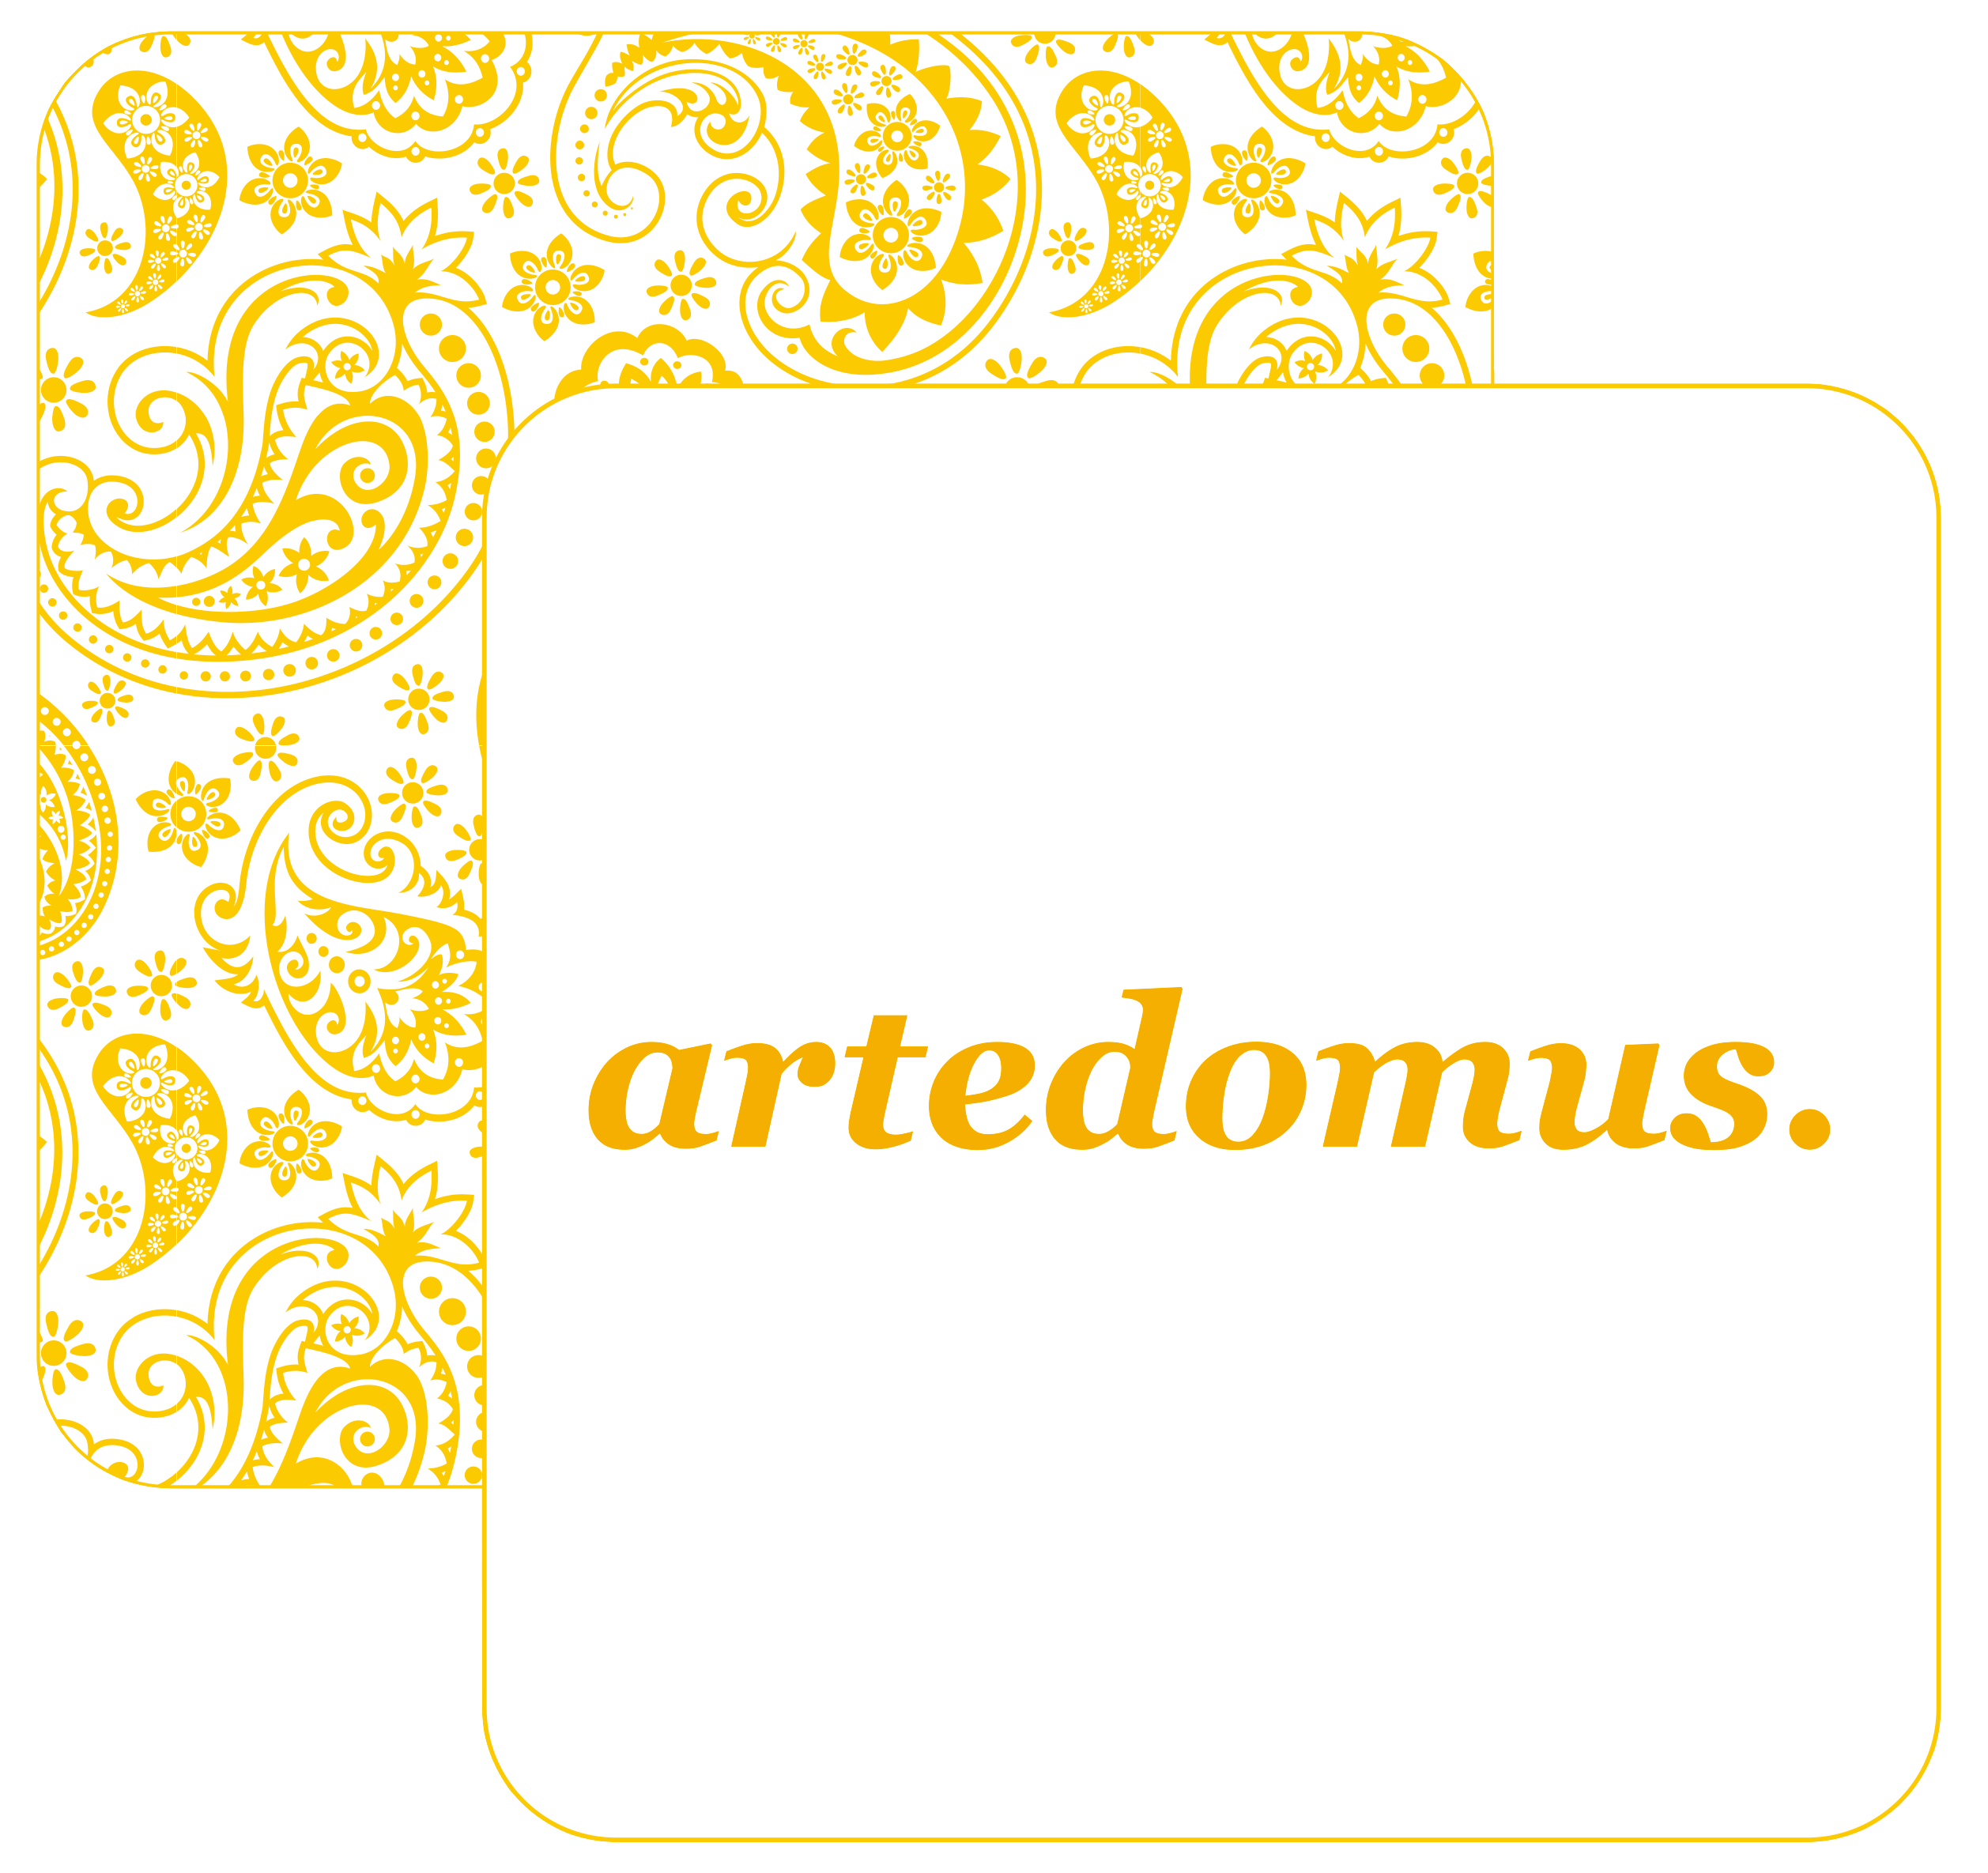 artedomus. interior design